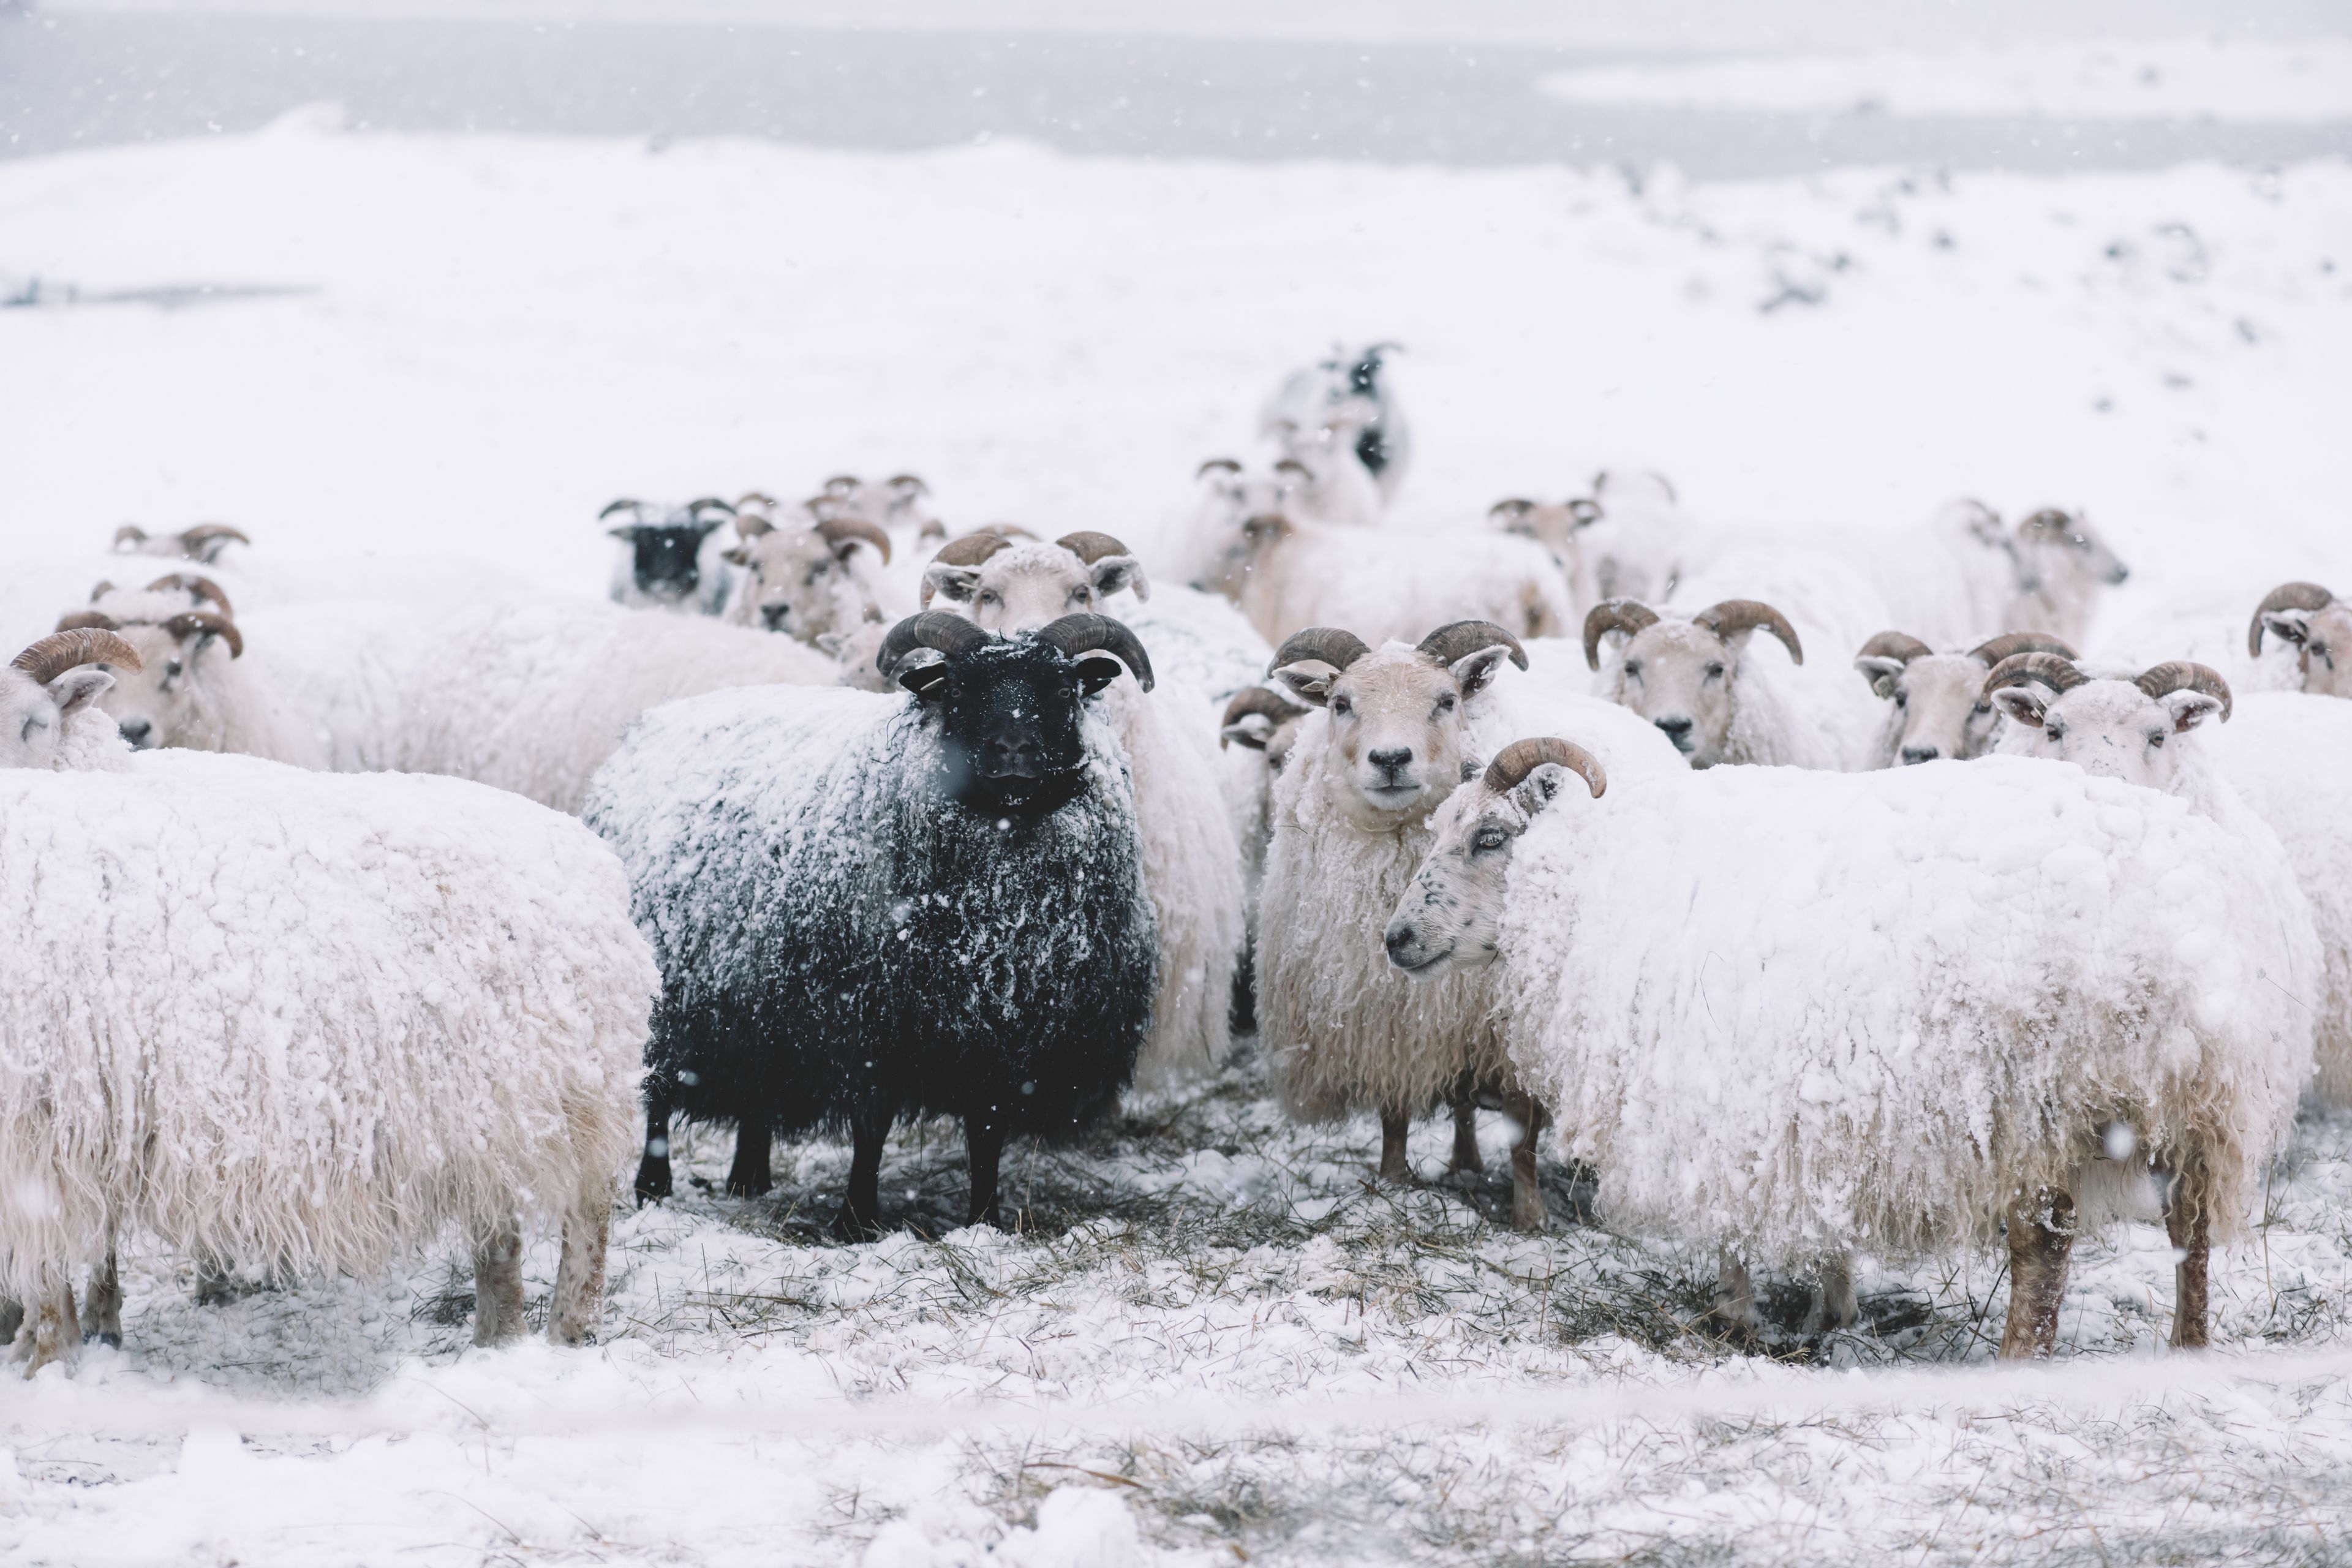 Icelandic sheep roaming in the winter snowy field,beyond their season. 